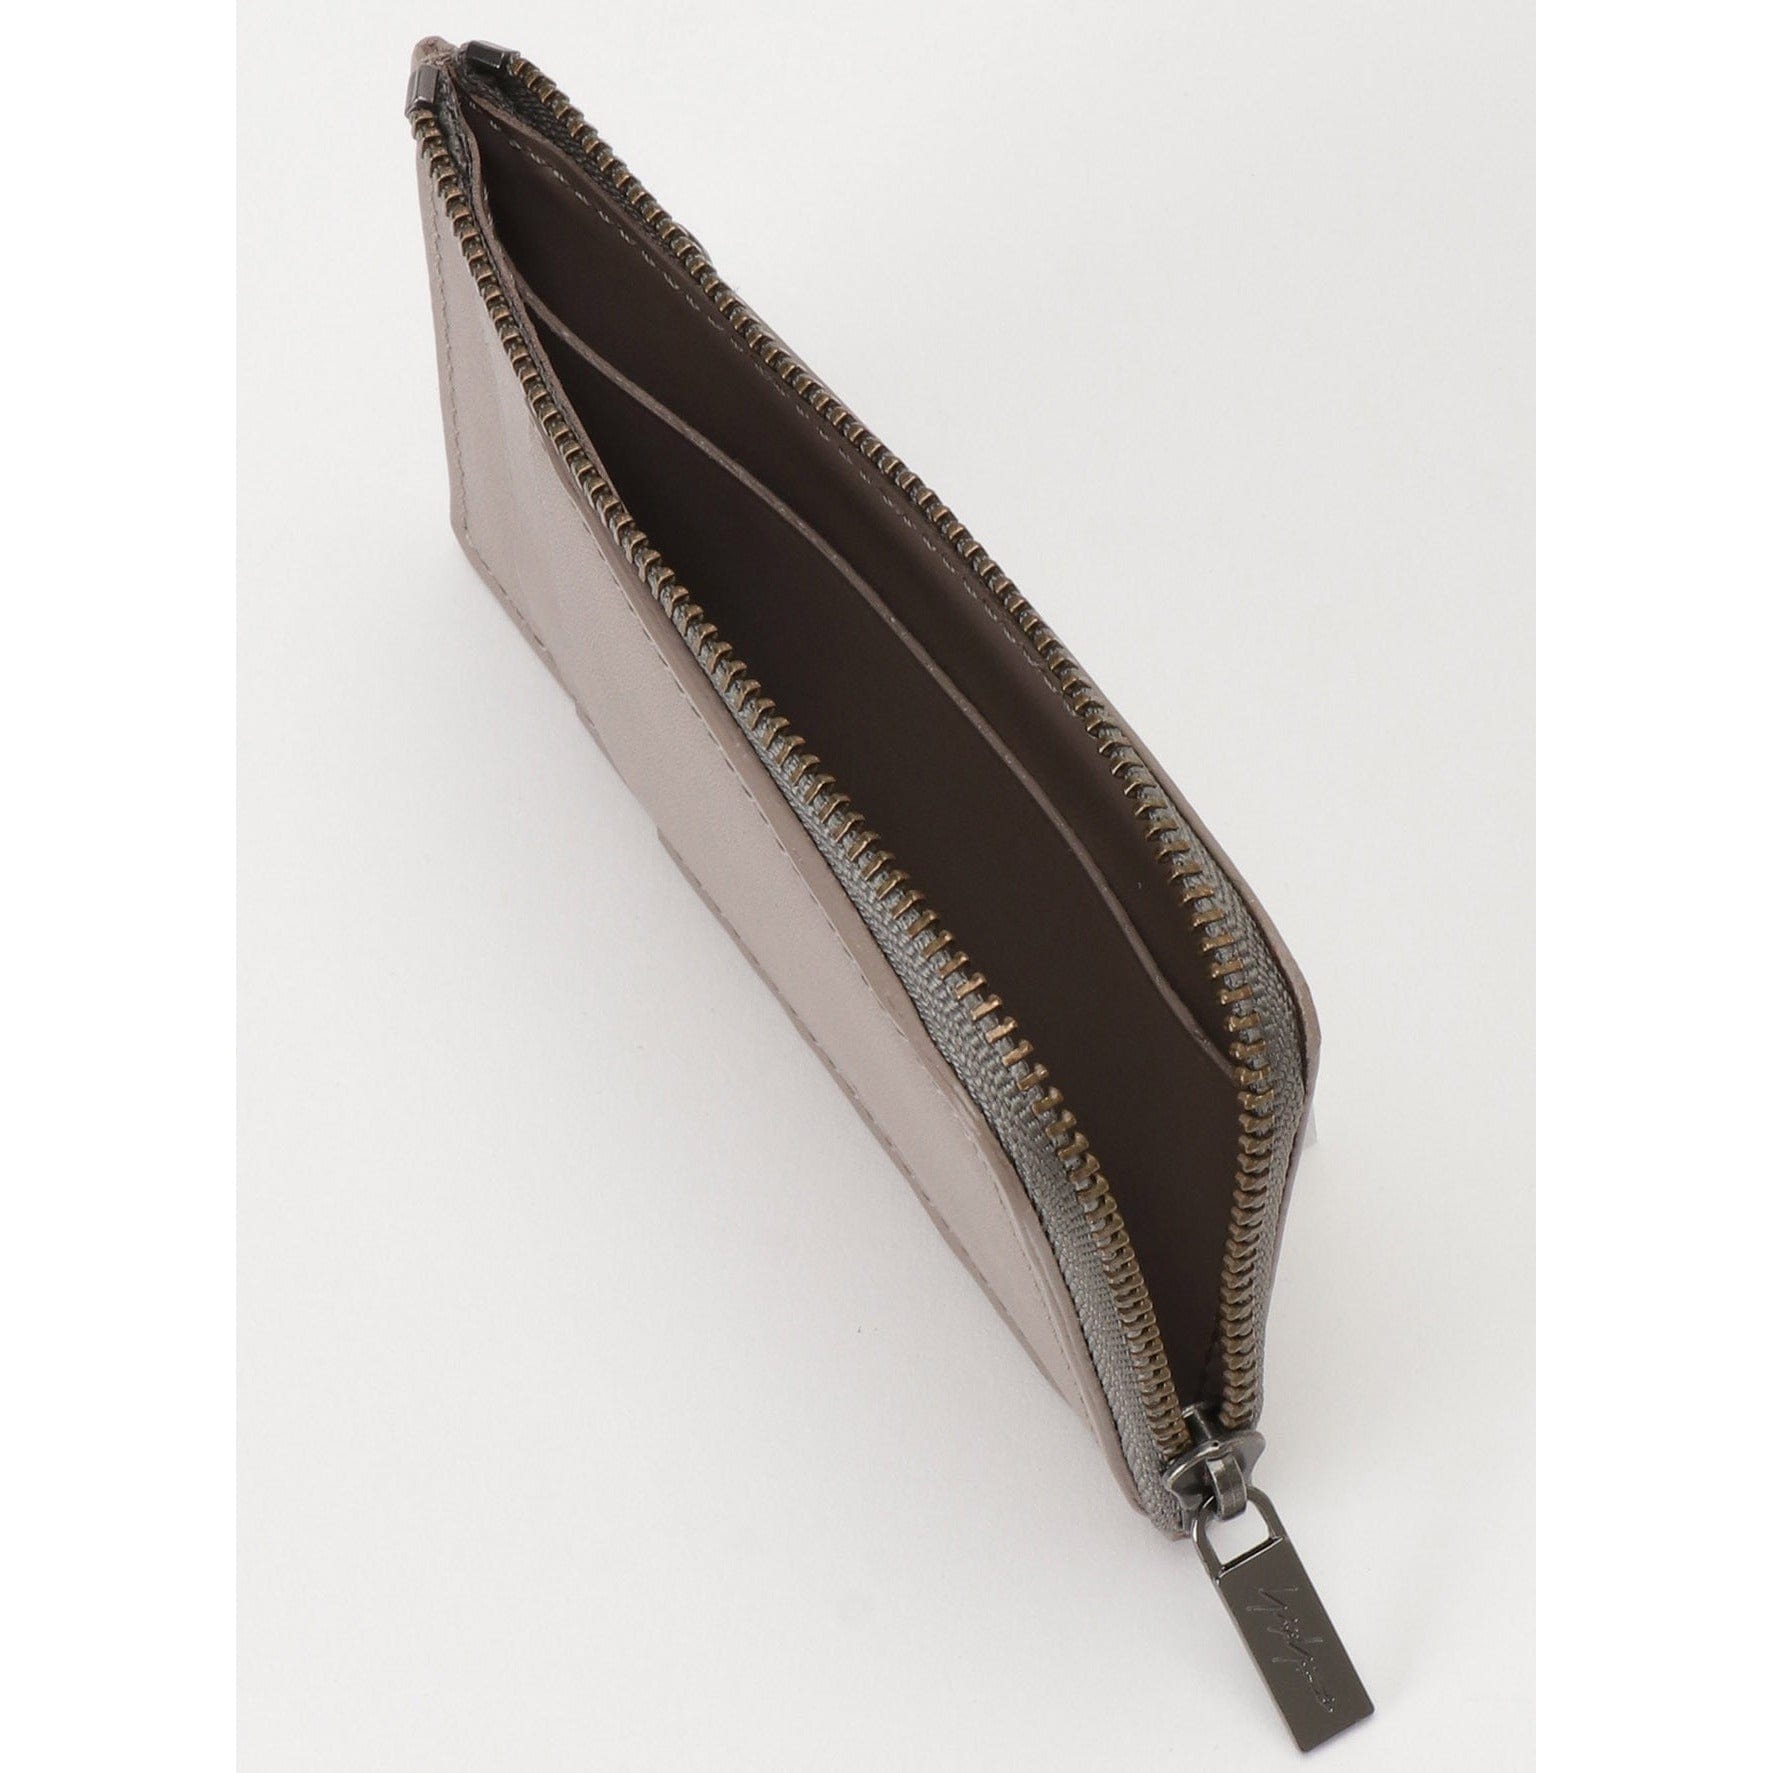 Yohji Yamamoto Wallets & Money Clips 7.5cm x 12.5cm x 1.5cm / Beige / Cow Leather Yohji Yamamoto Mini Card Wallet